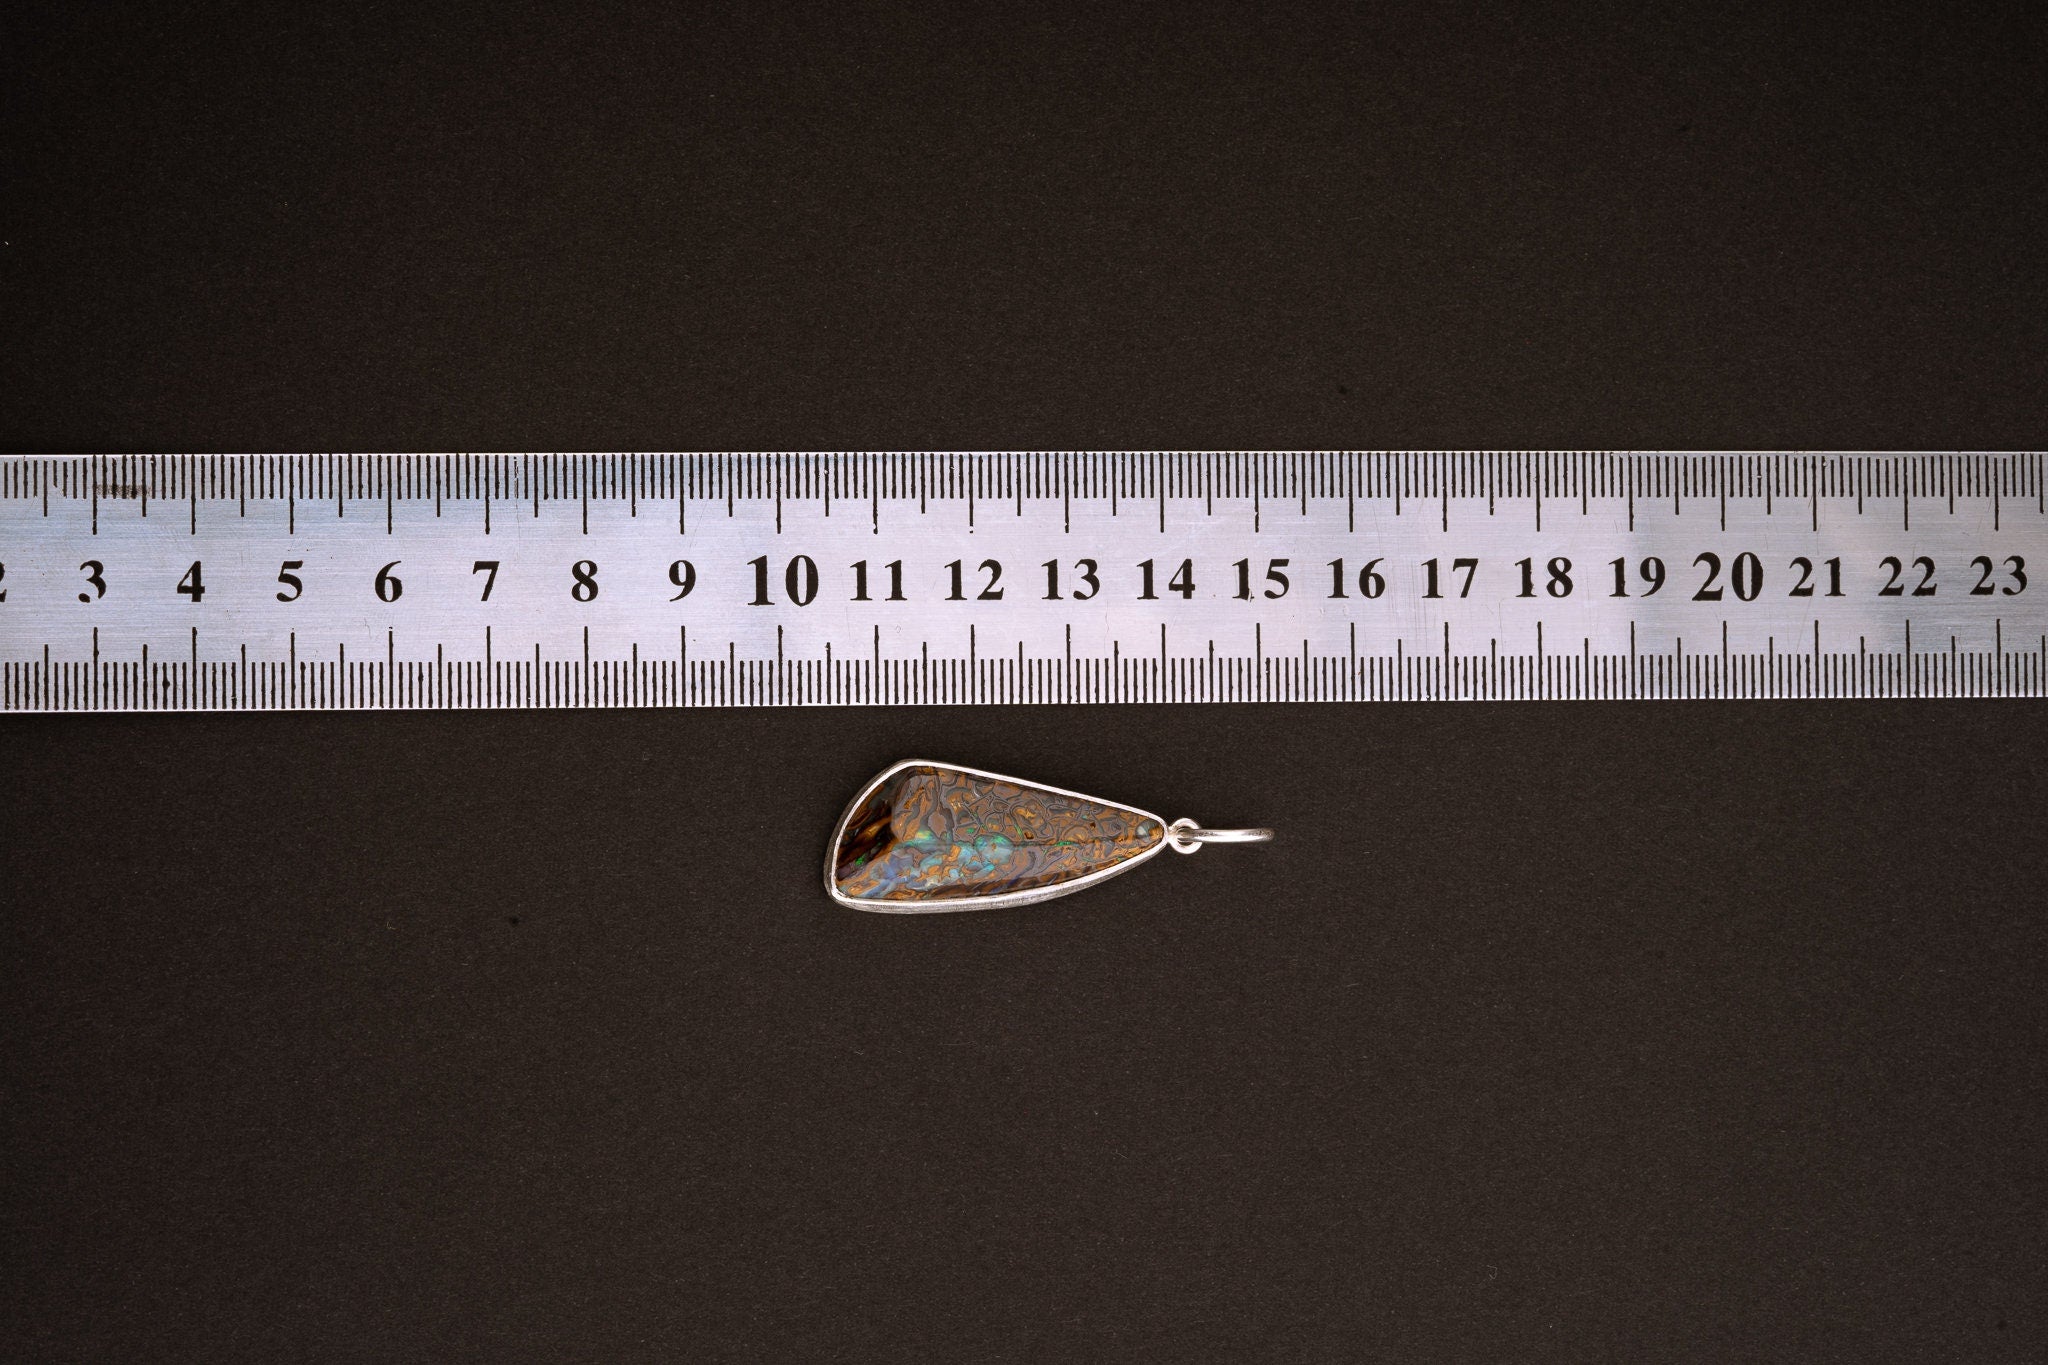 Australian Free Form Cabochon Fiery Matrix Boulder Opal Pendant - Natural Opal - Textured 925 Silver Setting - Crystal Pendant Neckpiece